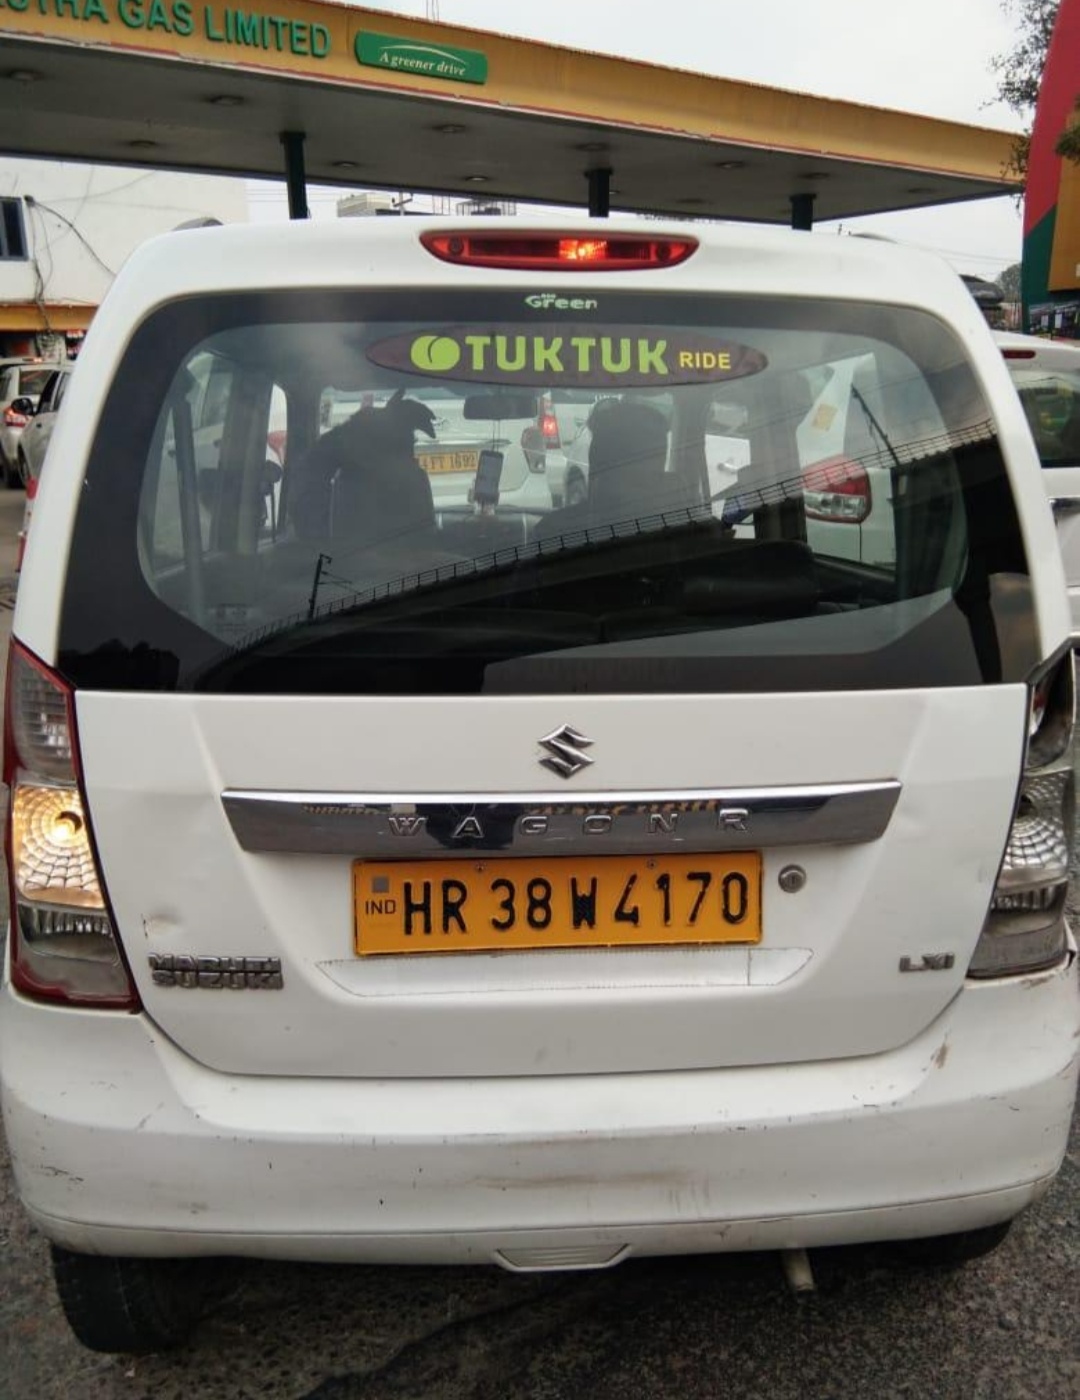 A TukTuk Ride cab. (Source: TukTukRide) 